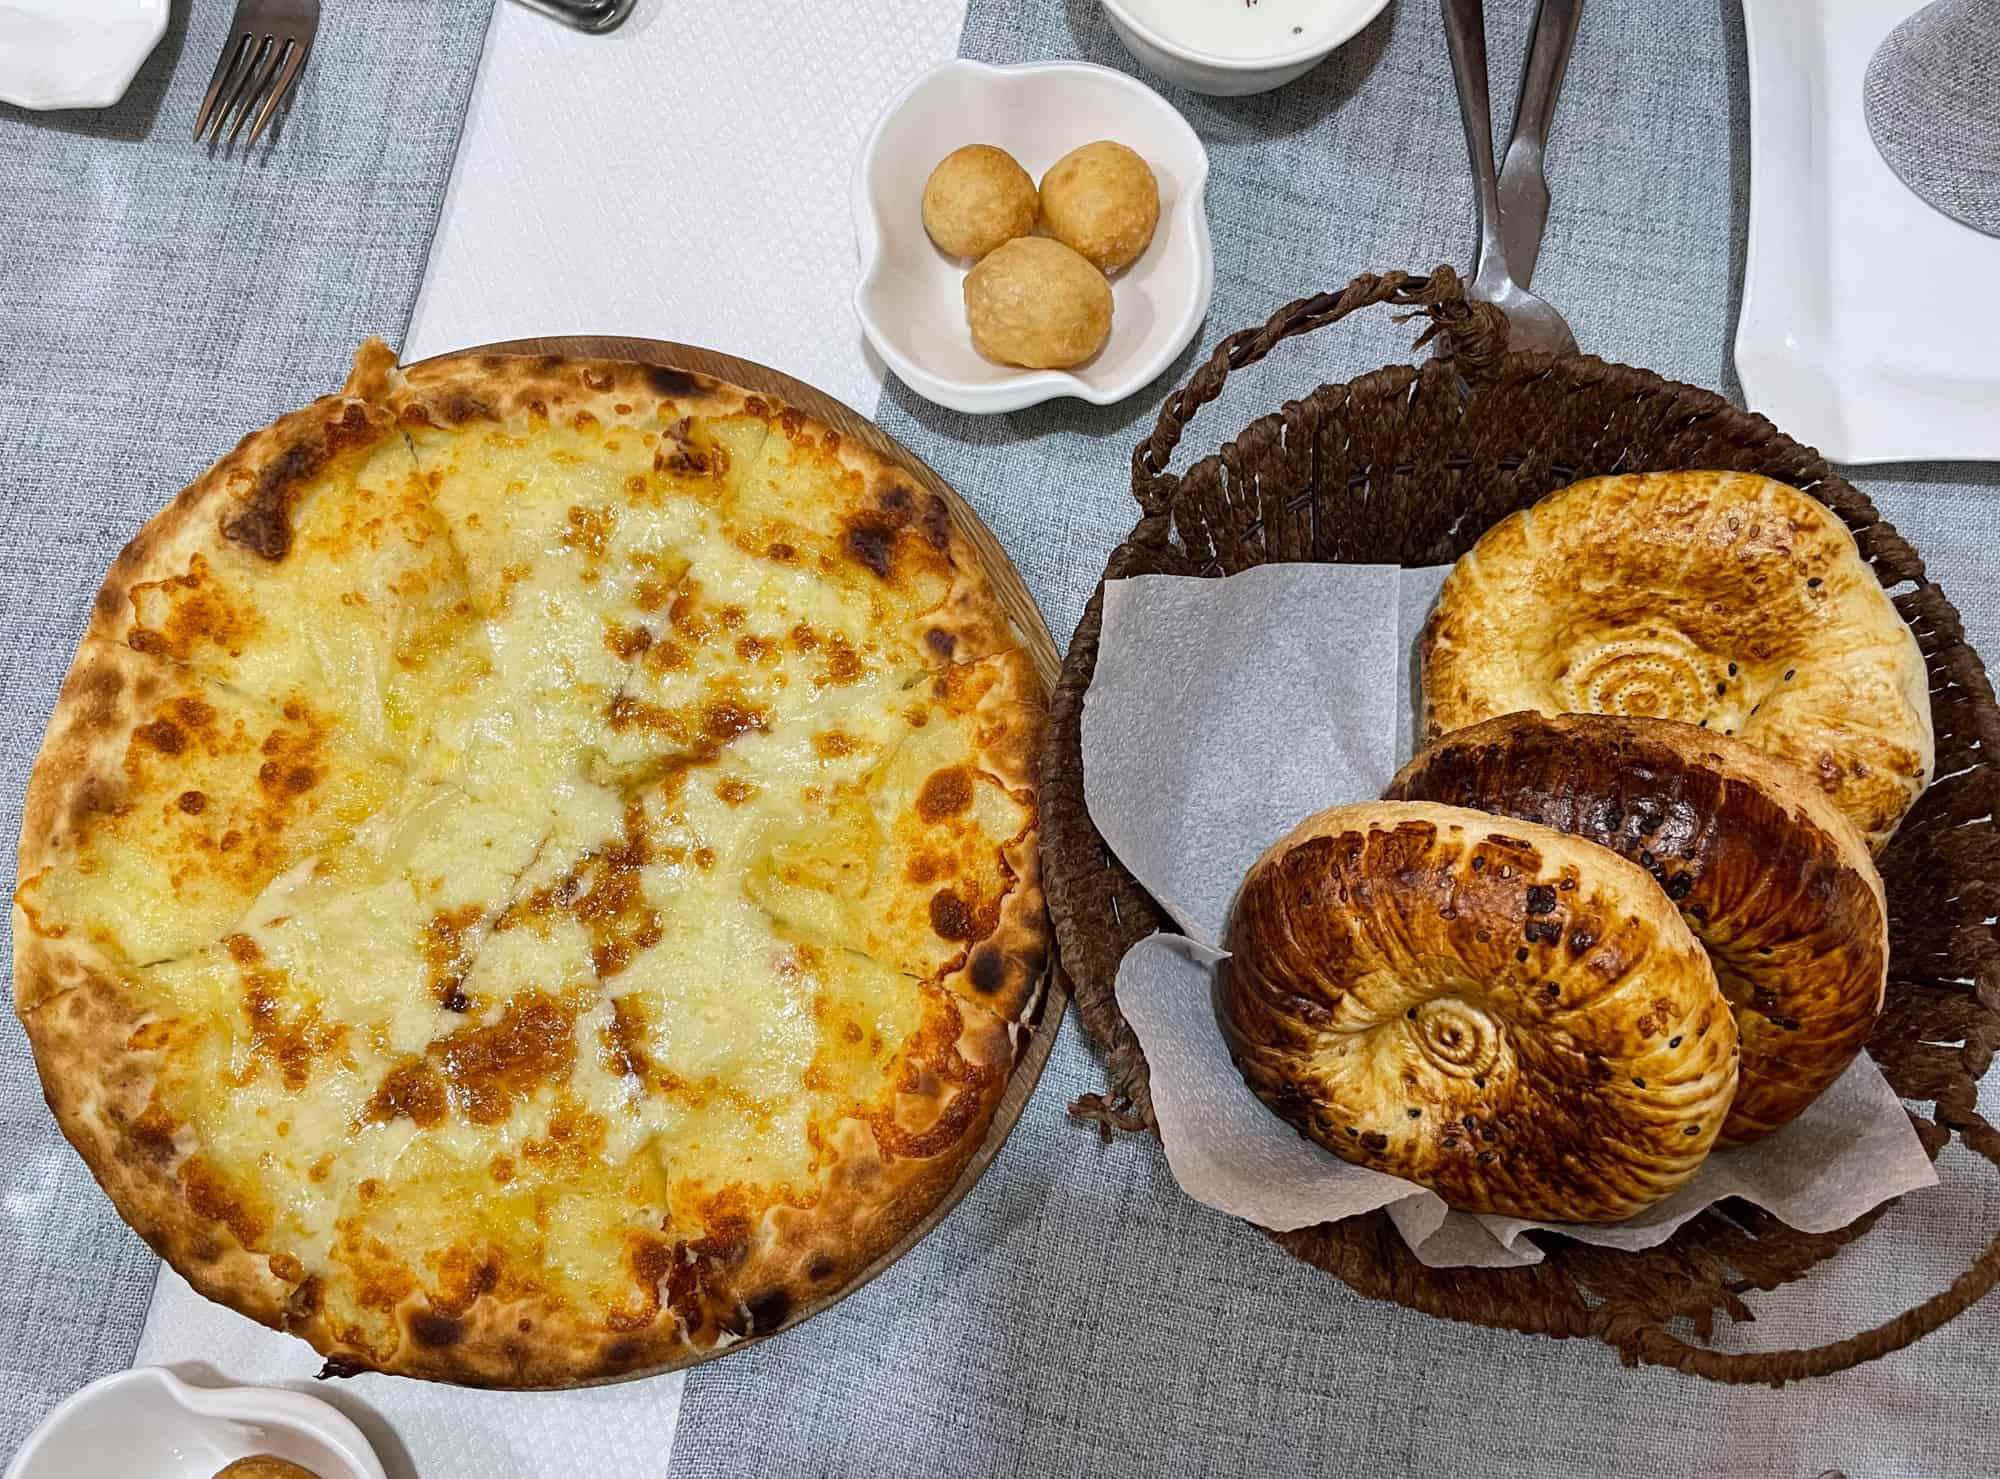 Kazakhstan Food - Shelpa with baursak balls and breads